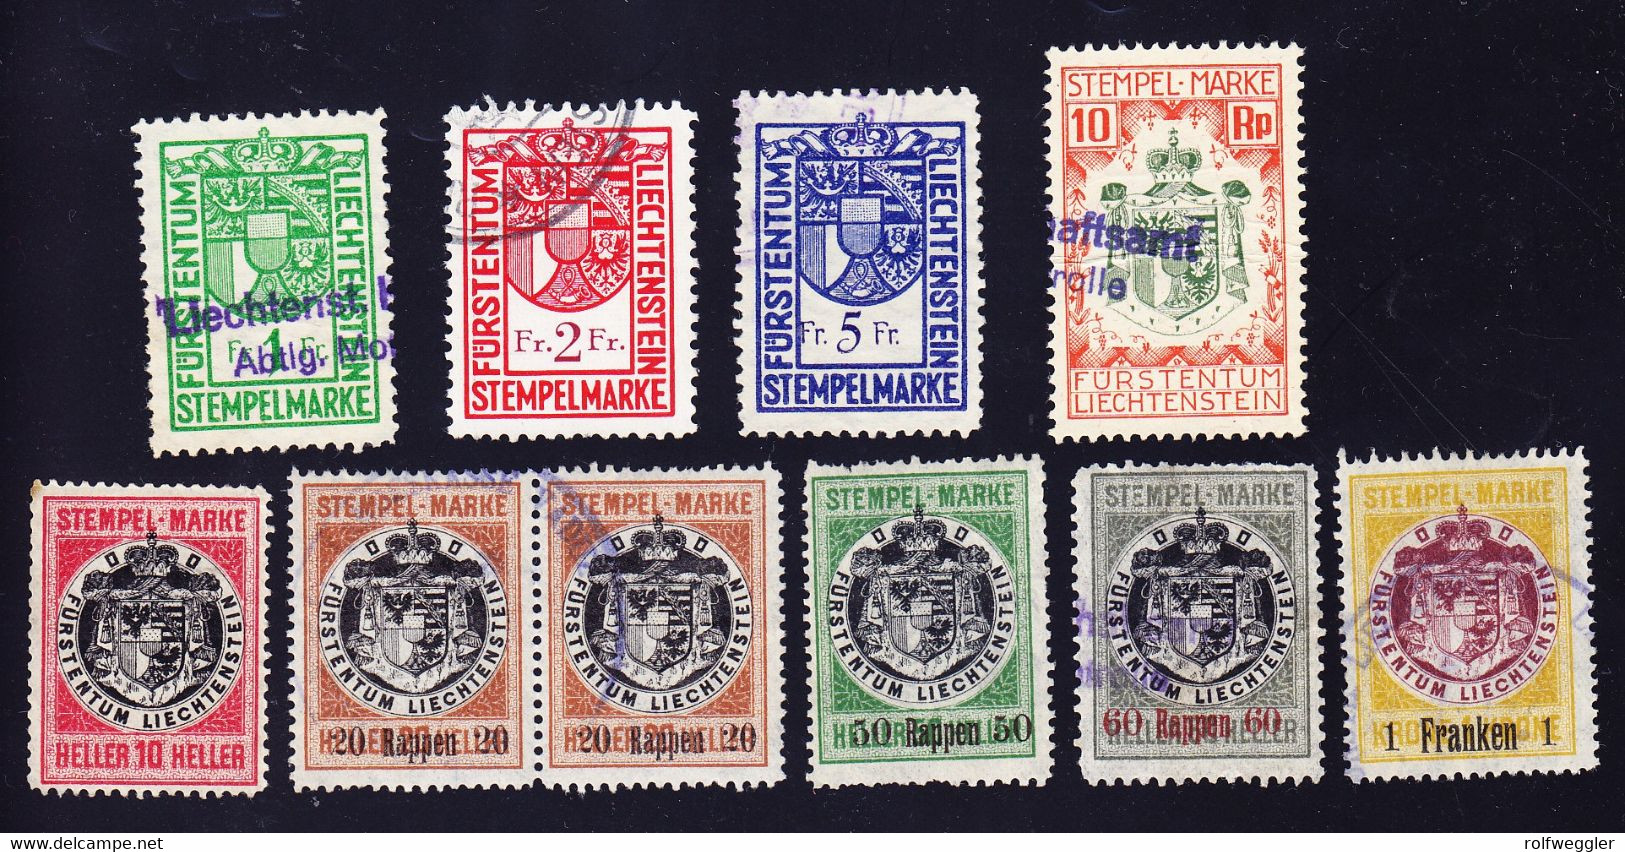 1903/1937  10 Taxmarken (1 Paar) - Fiscale Zegels